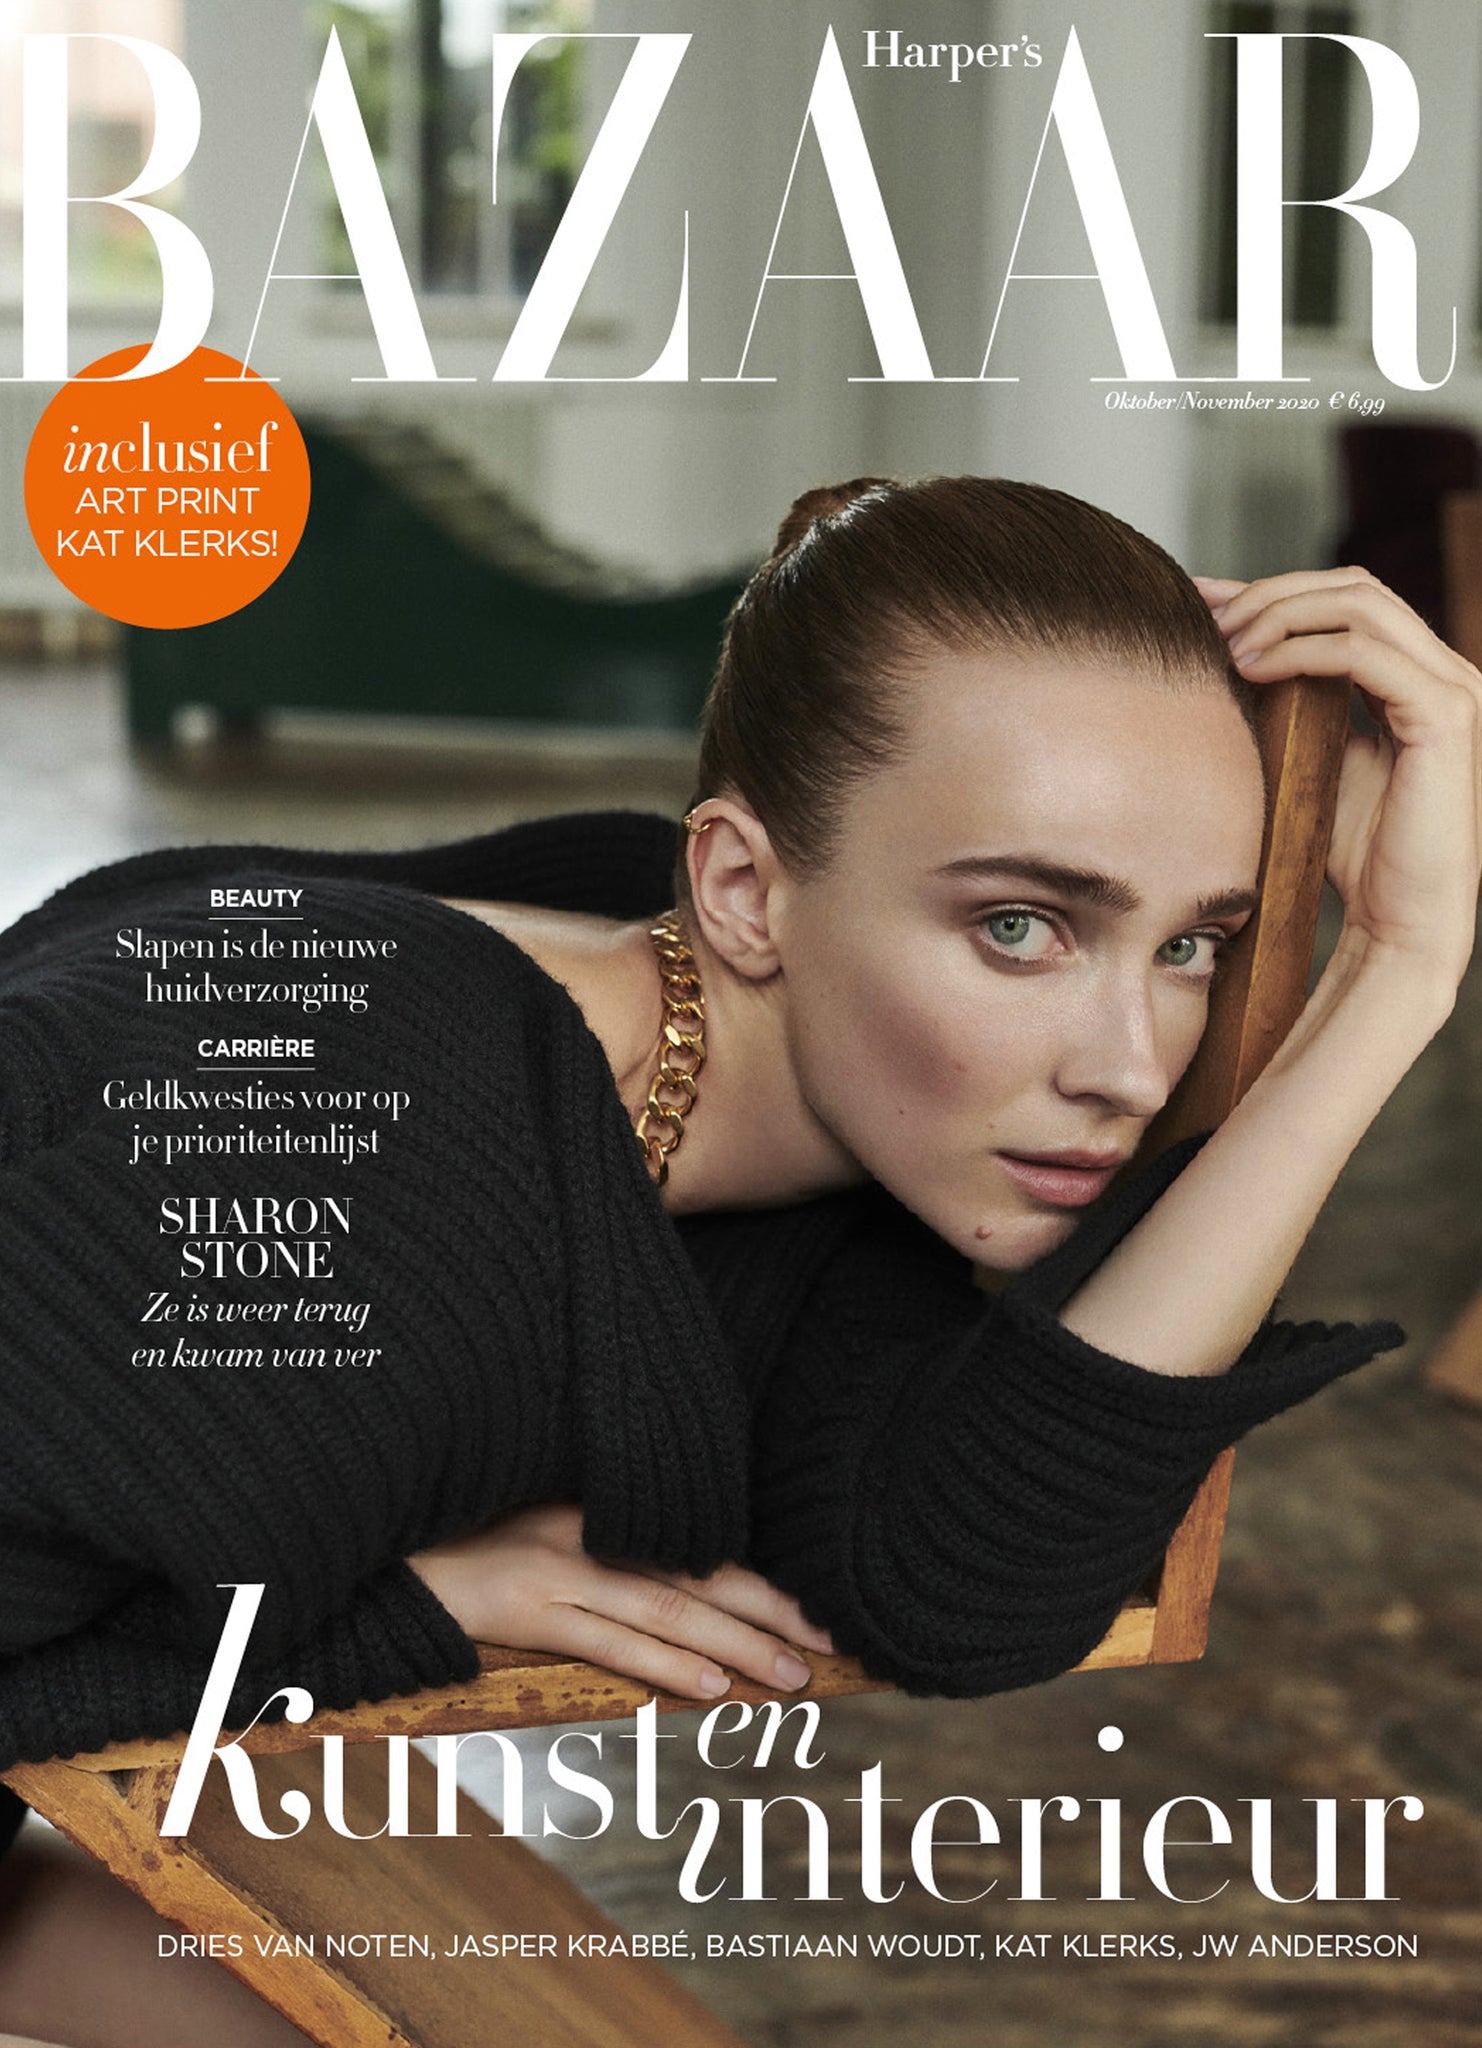 Harper's Bazaar NL, October/November 2020